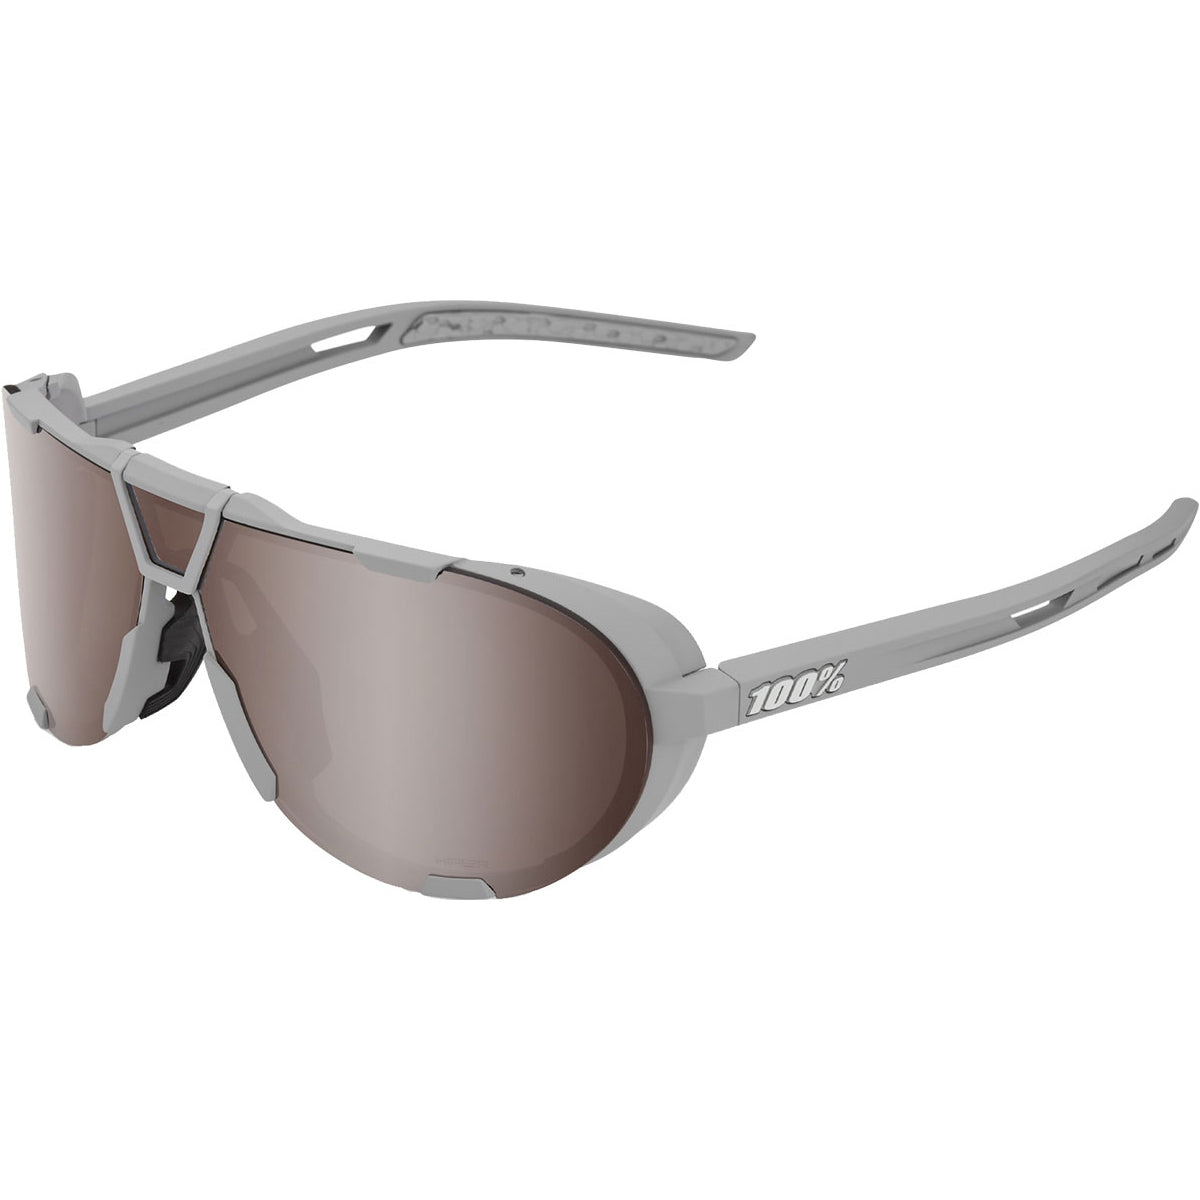 100 Percent Westcraft Sunglasses - Soft Tact Cool Grey - HiPER Crimson Silver Mirror Lens